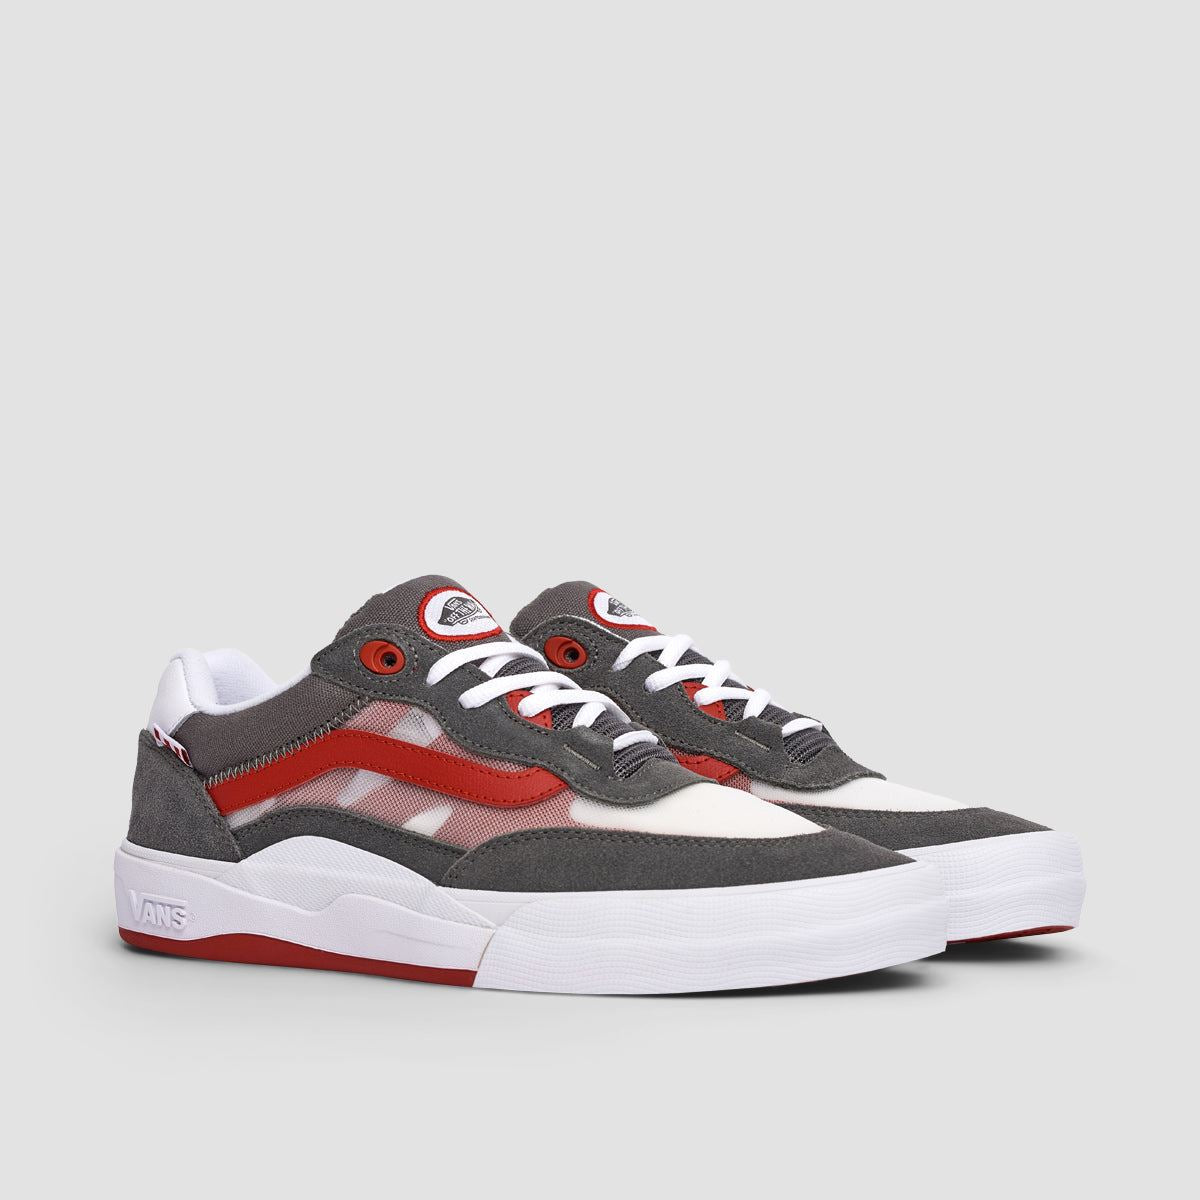 Vans Wayvee Shoes - Grey/Red